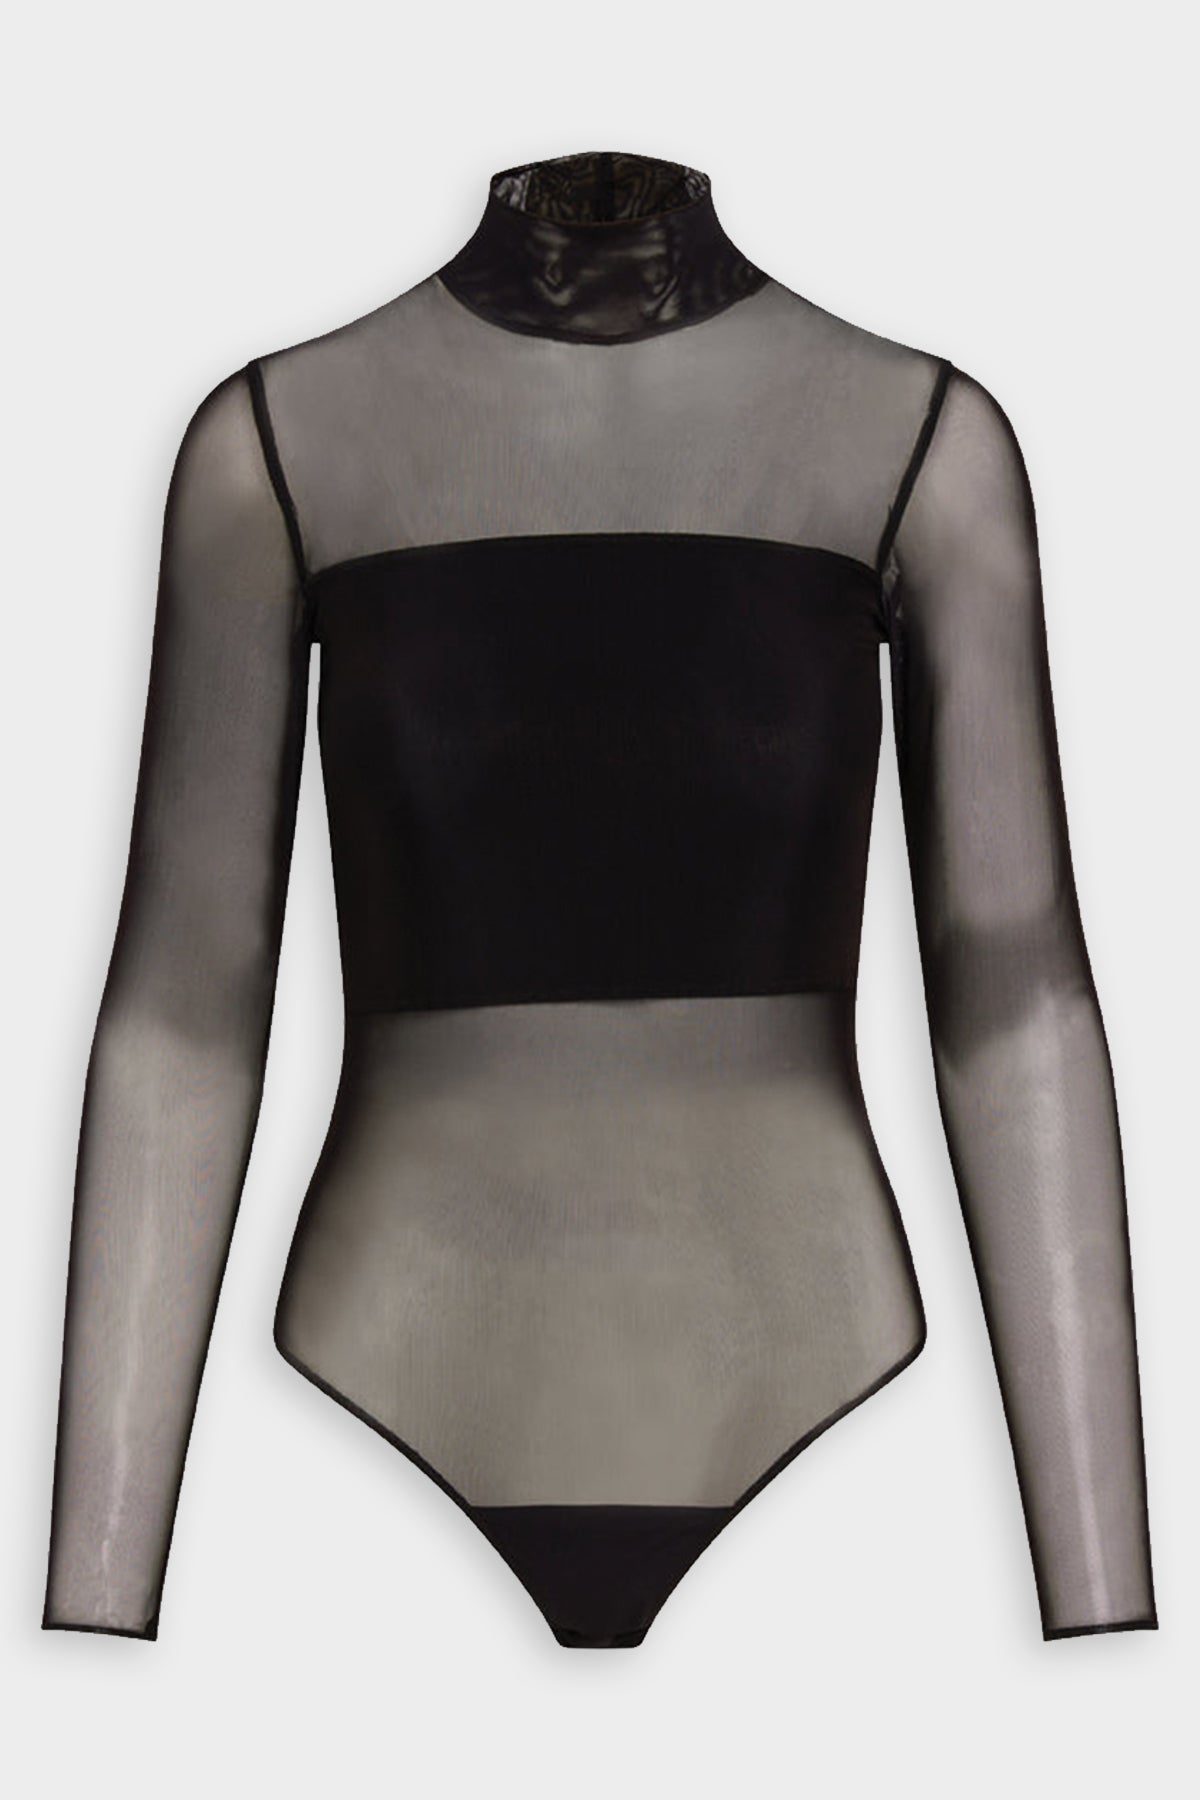 Black paneled mesh bodysuit